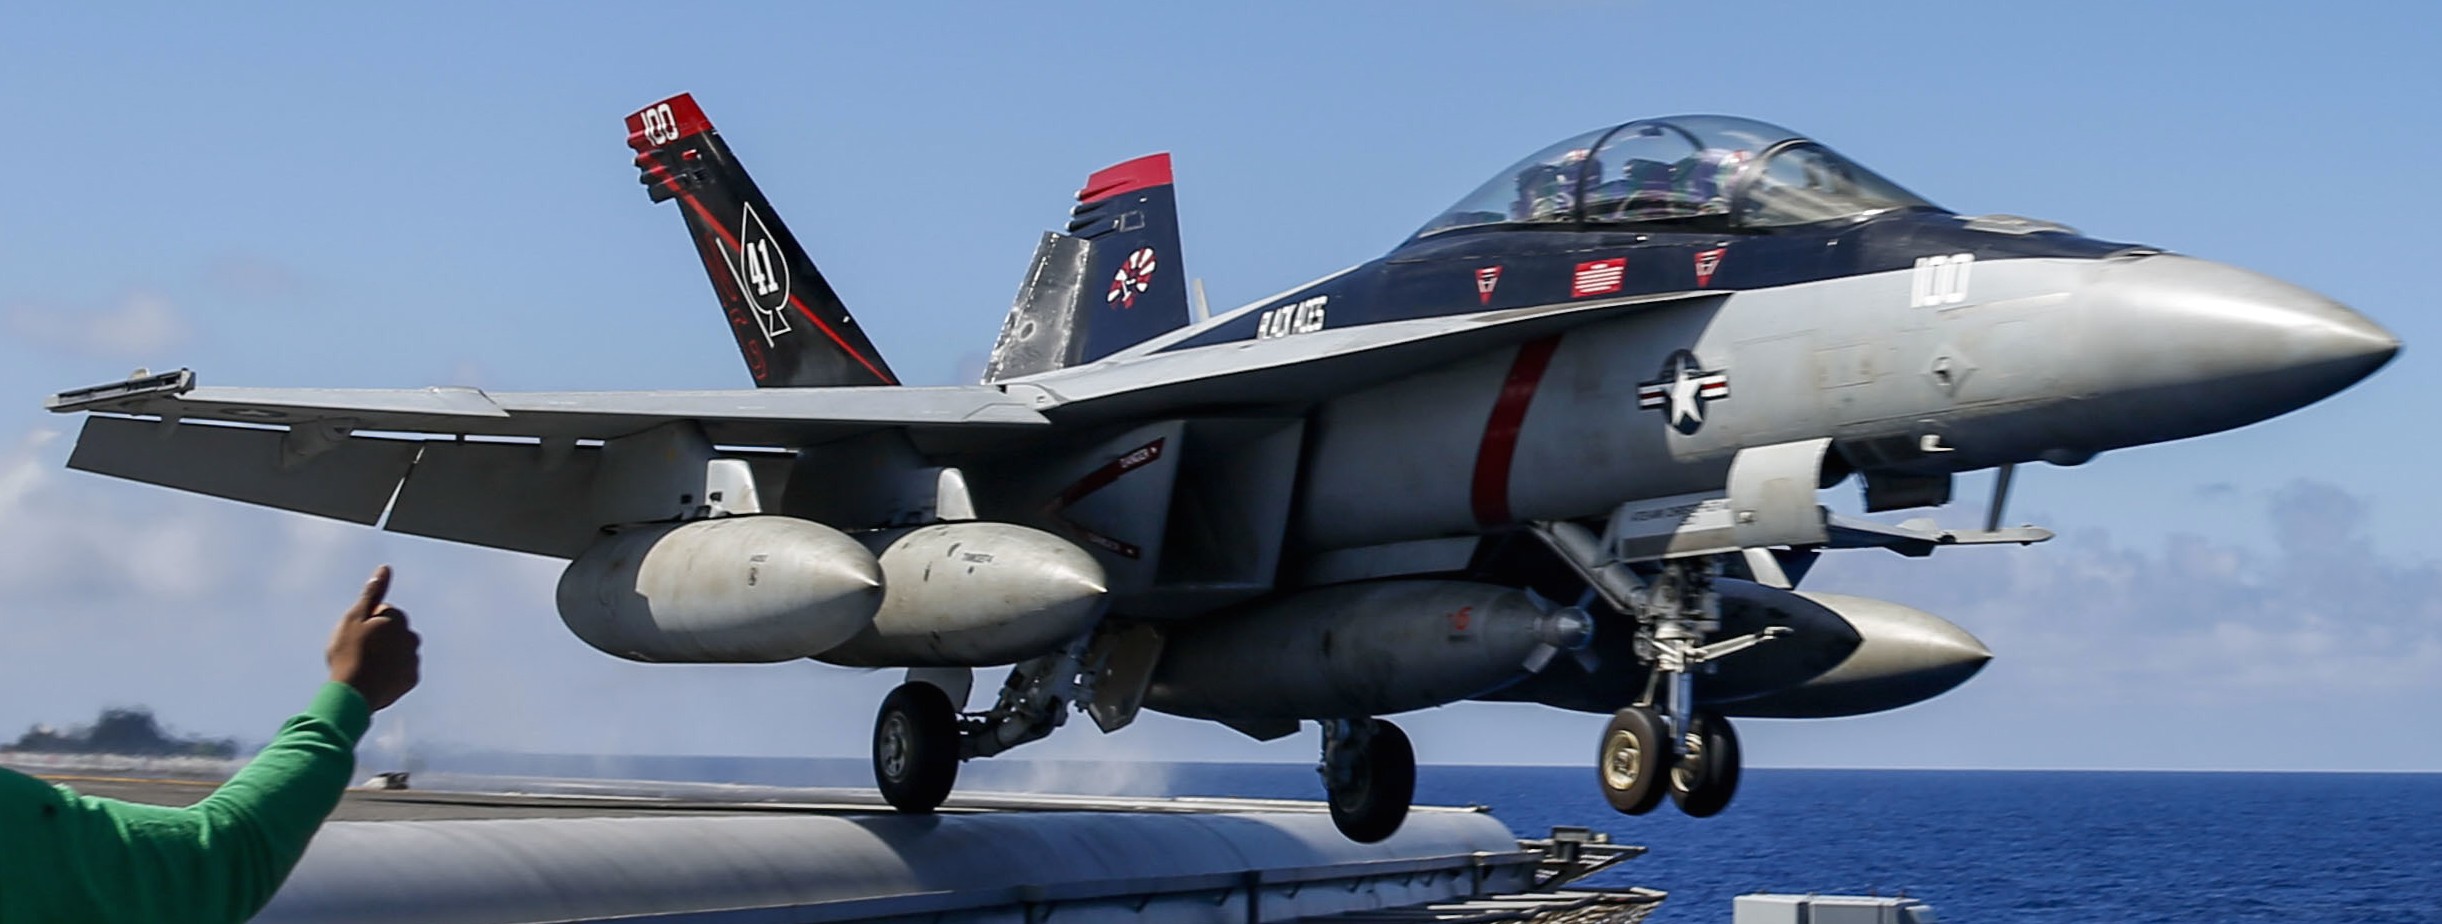 vfa-41 black aces strike fighter squadron f/a-18f super hornet cvw-9 cvn-72 uss abraham lincoln us navy 74